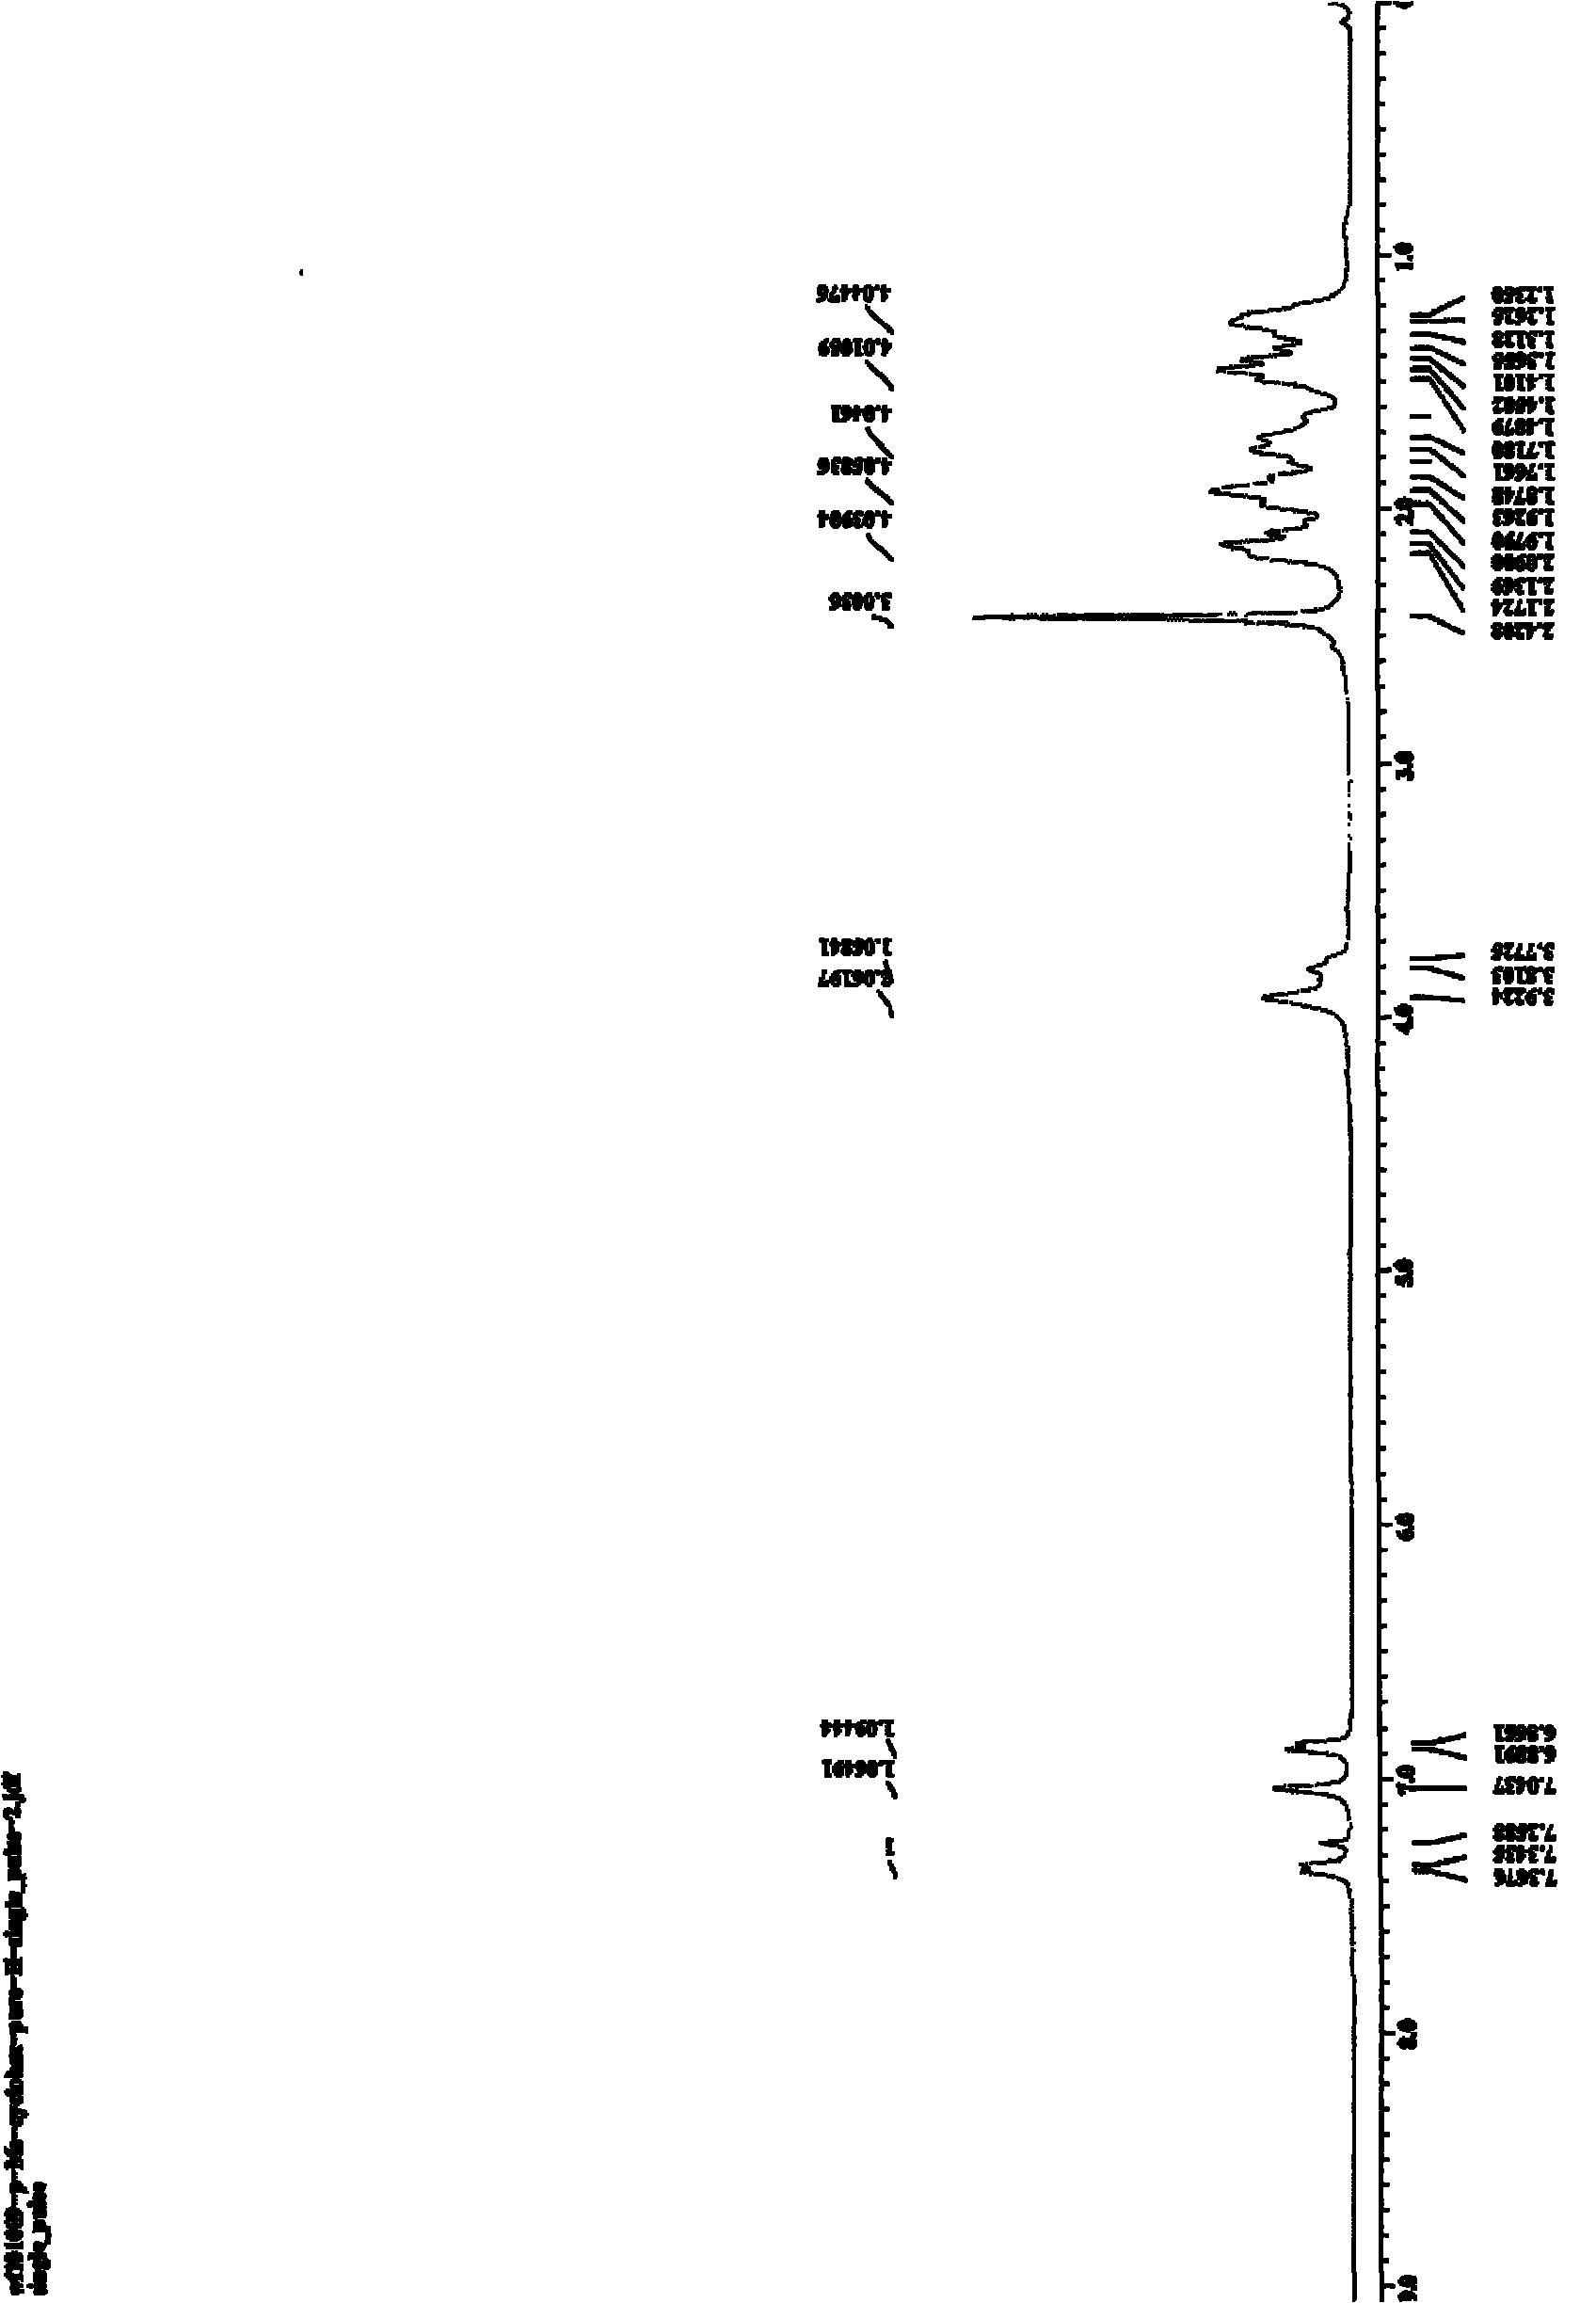 Method for preparing 2-aminobenzimidazole derivative